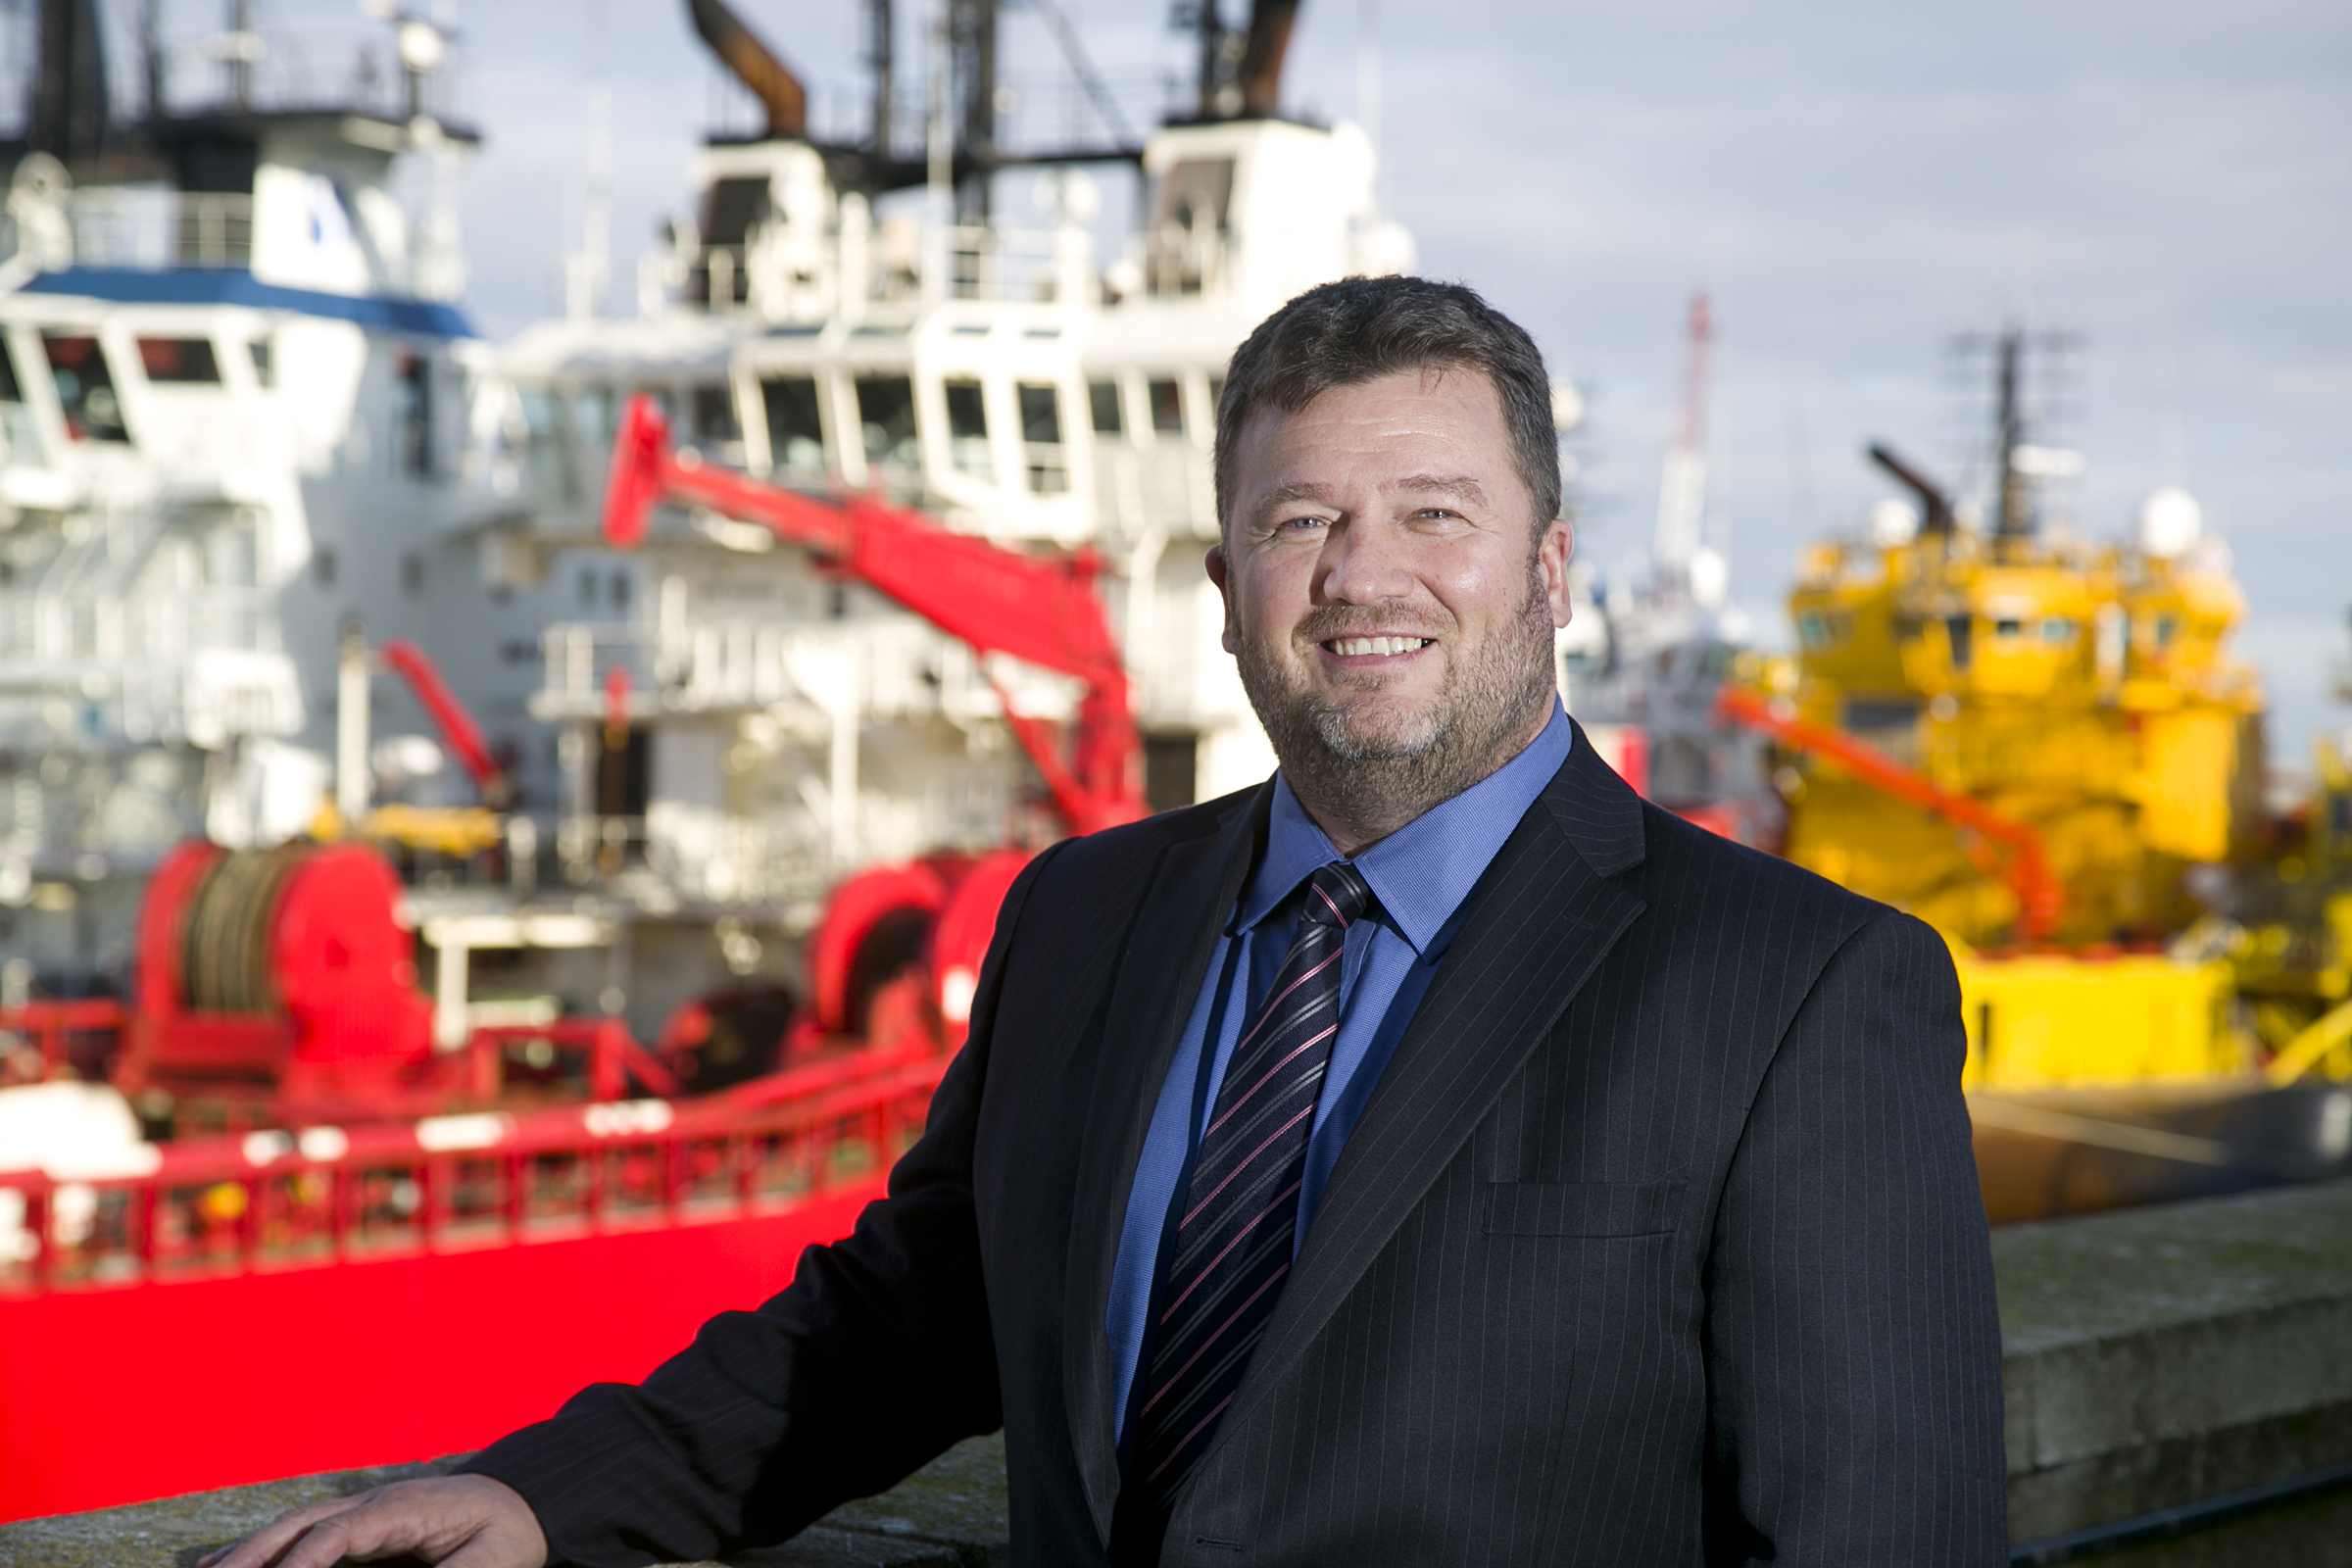 Roddy James, CCO at Port of Aberdeen